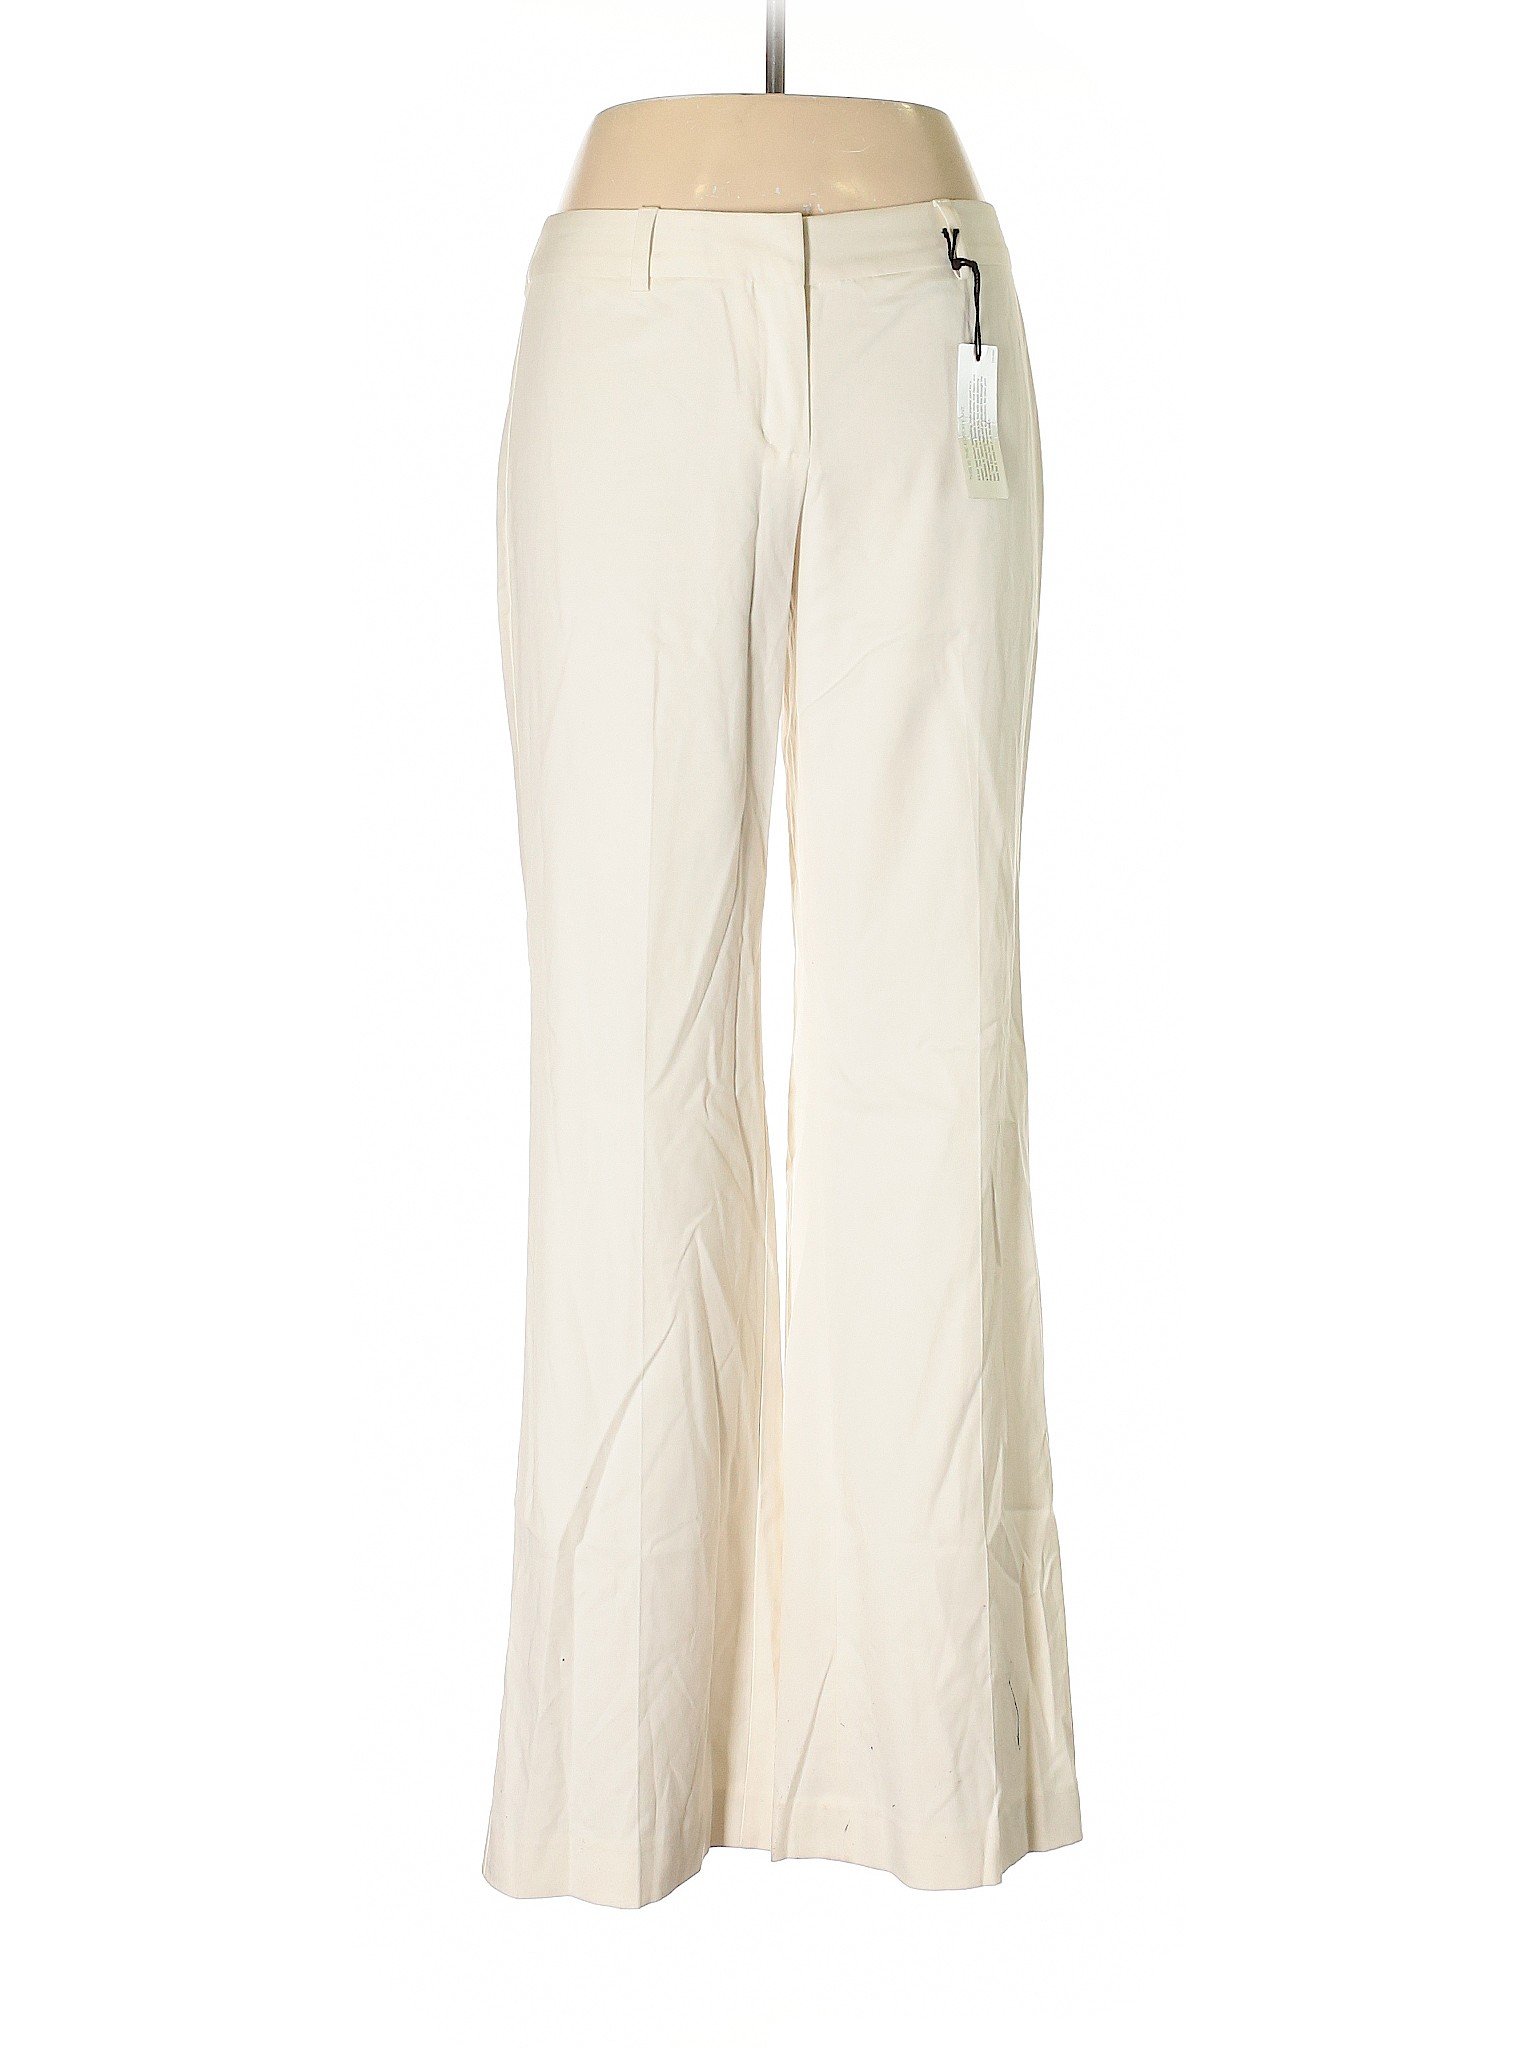 NWT Express Women Ivory Dress Pants 8 | eBay